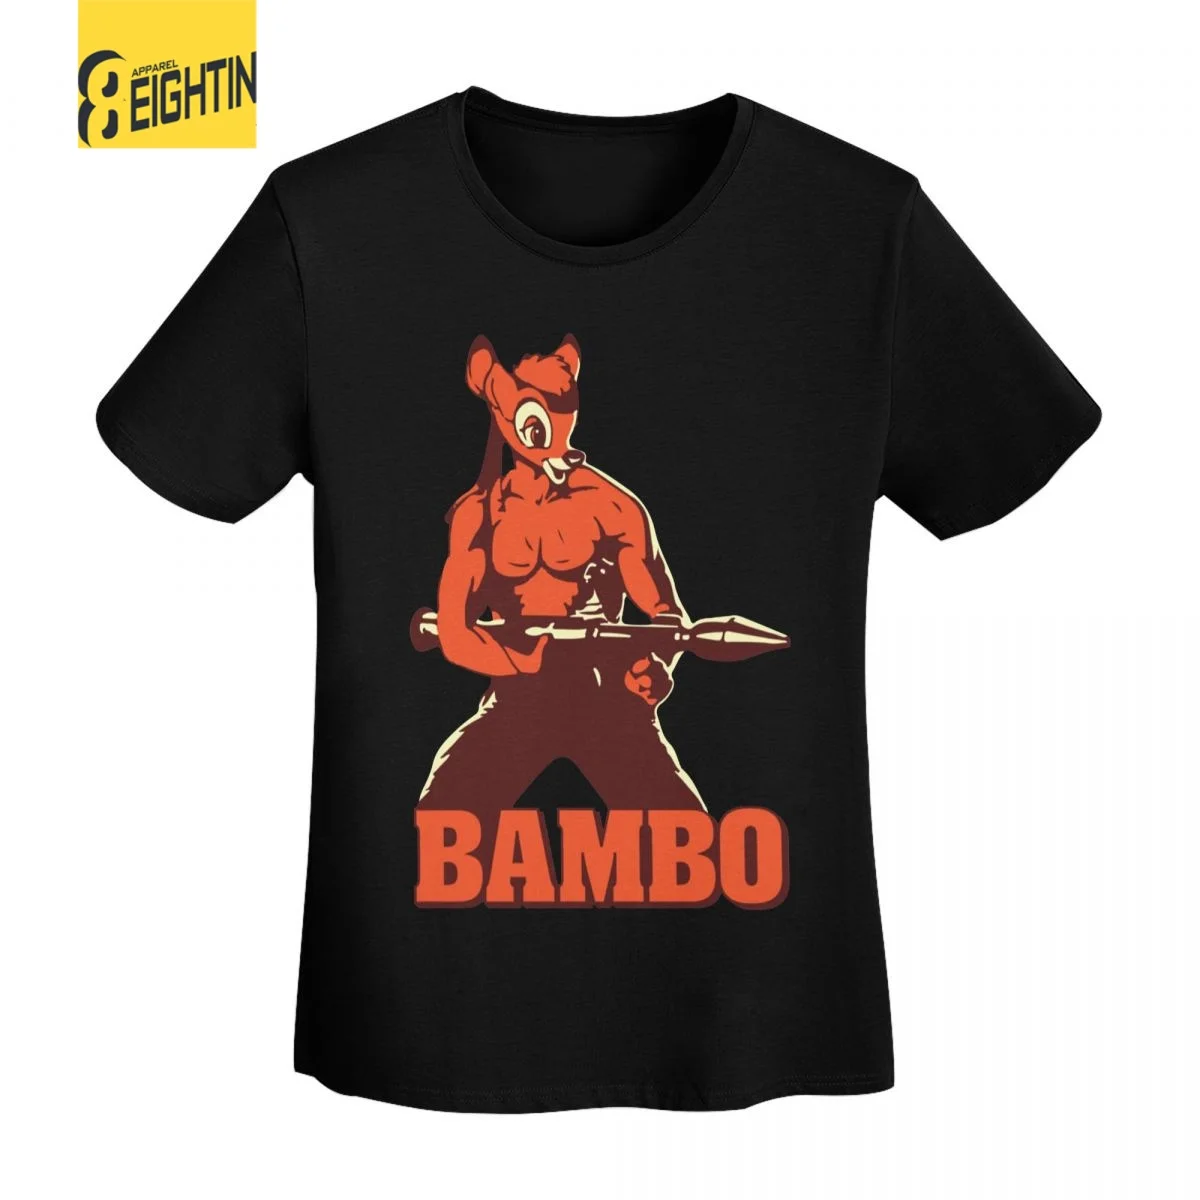 Camiseta de dibujos animados de Bambi para mujer, ropa de Disney, Camiseta estampada de manga corta, camiseta de verano para mujer